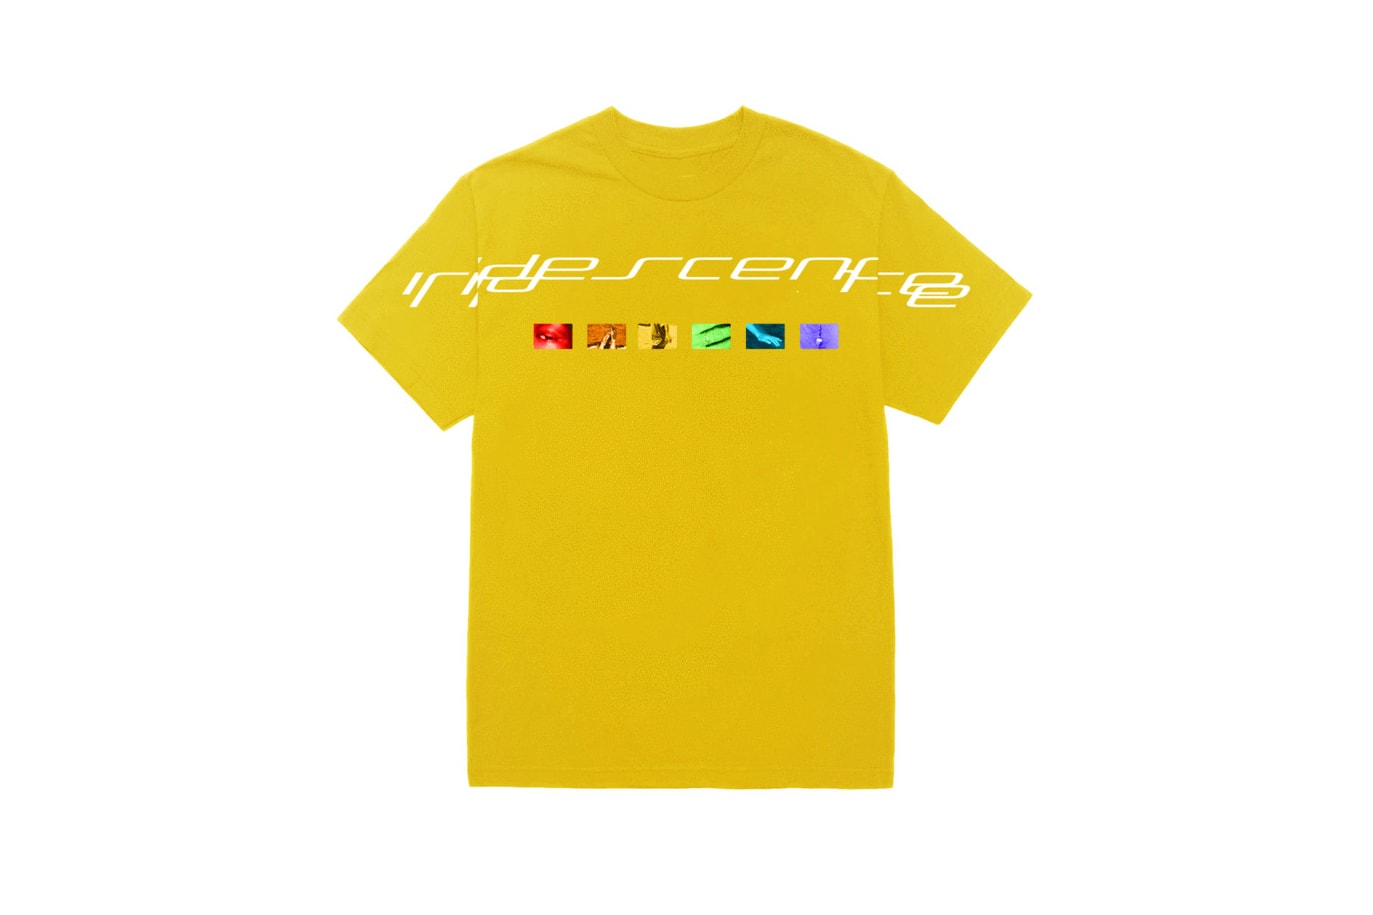 brockhampton iridescence merch collection yellow t-shirt